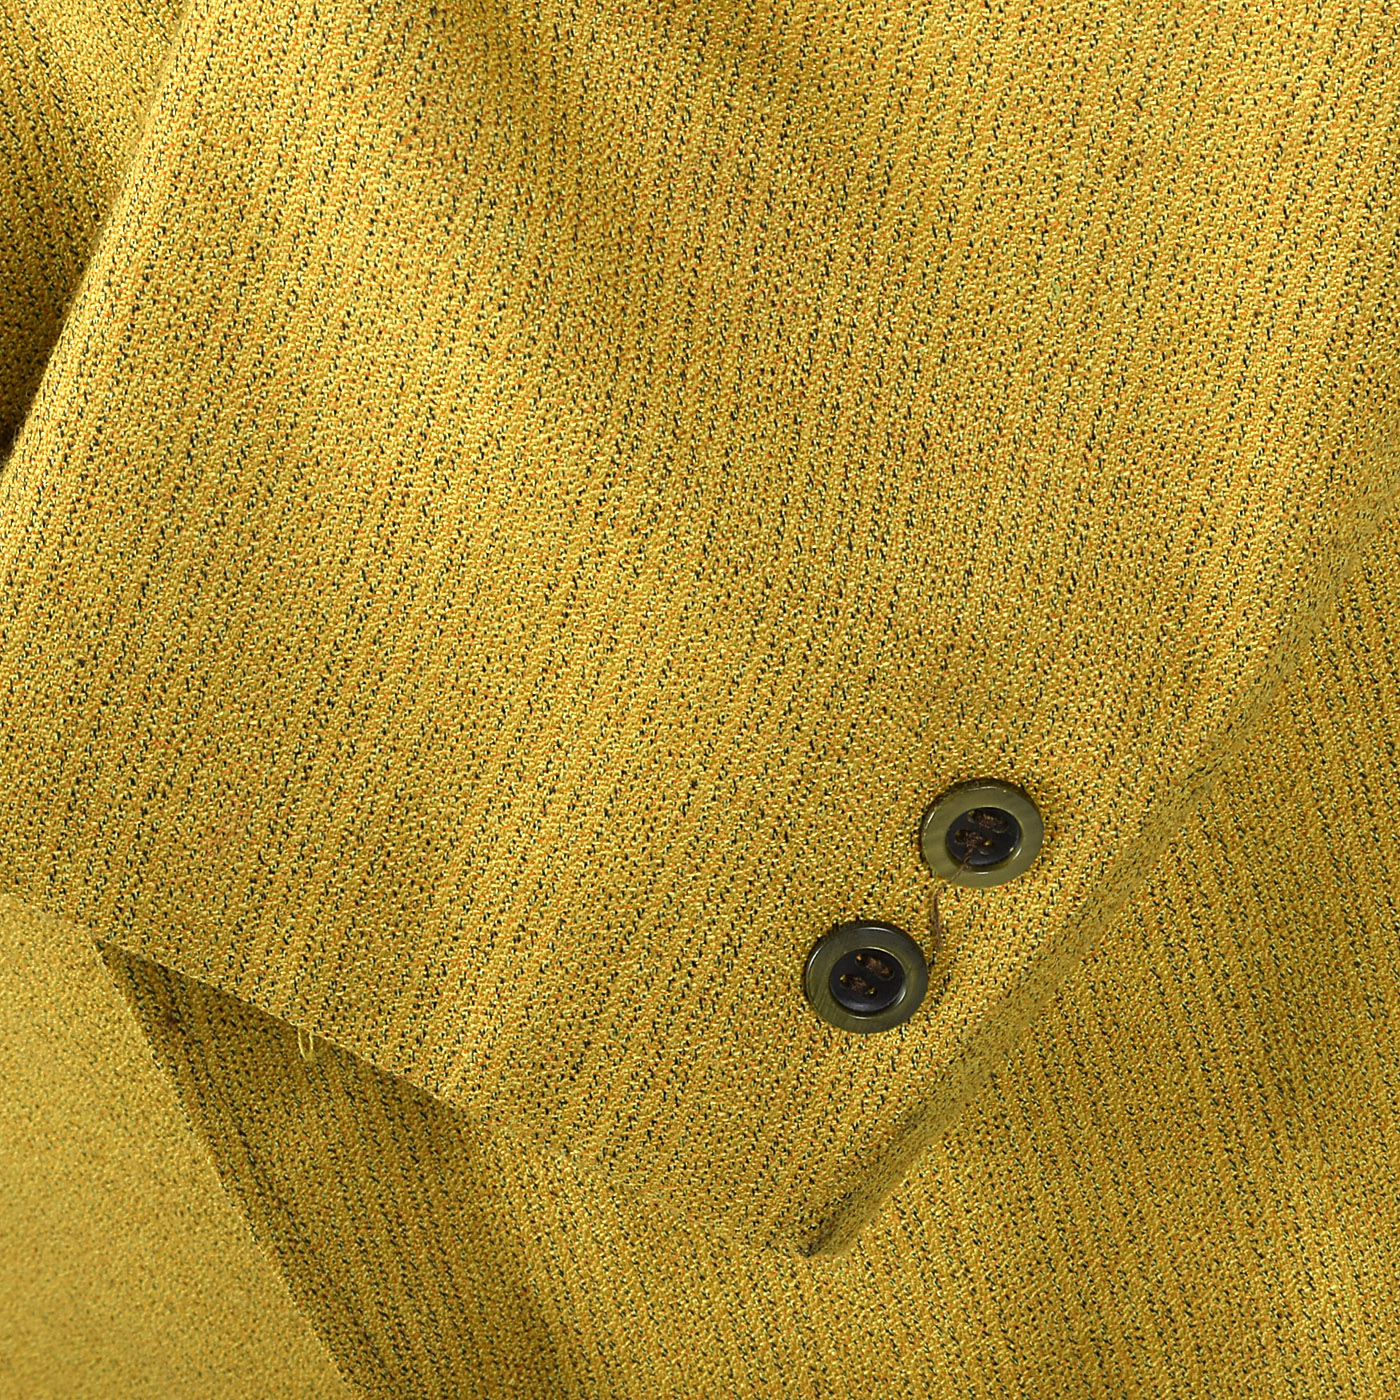 1960s Gold Stripe Jacket